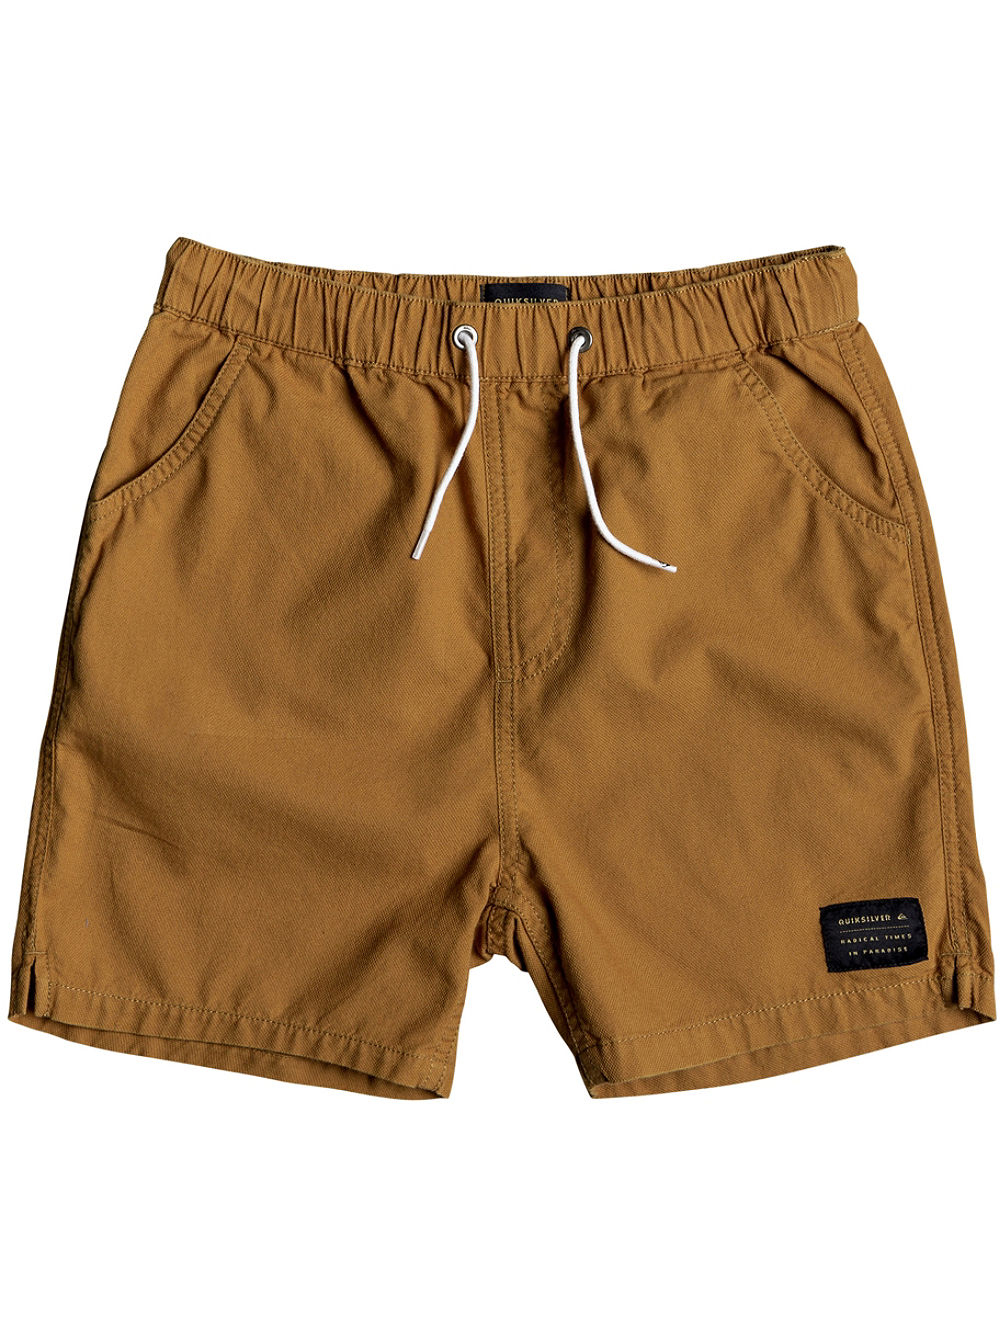 Wapu Street Shorts